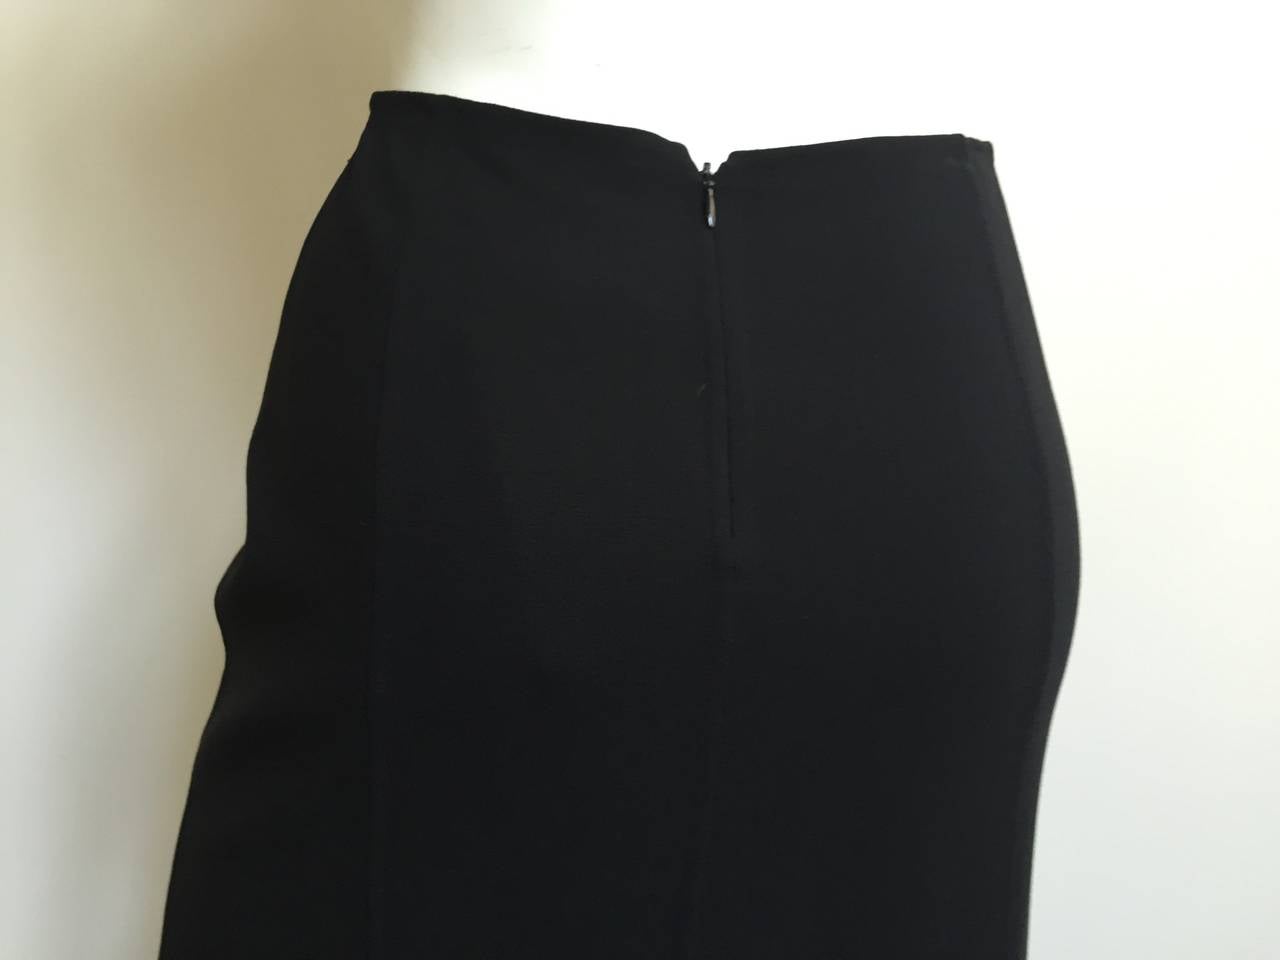 Celine black wool skirt size 4/6. 2